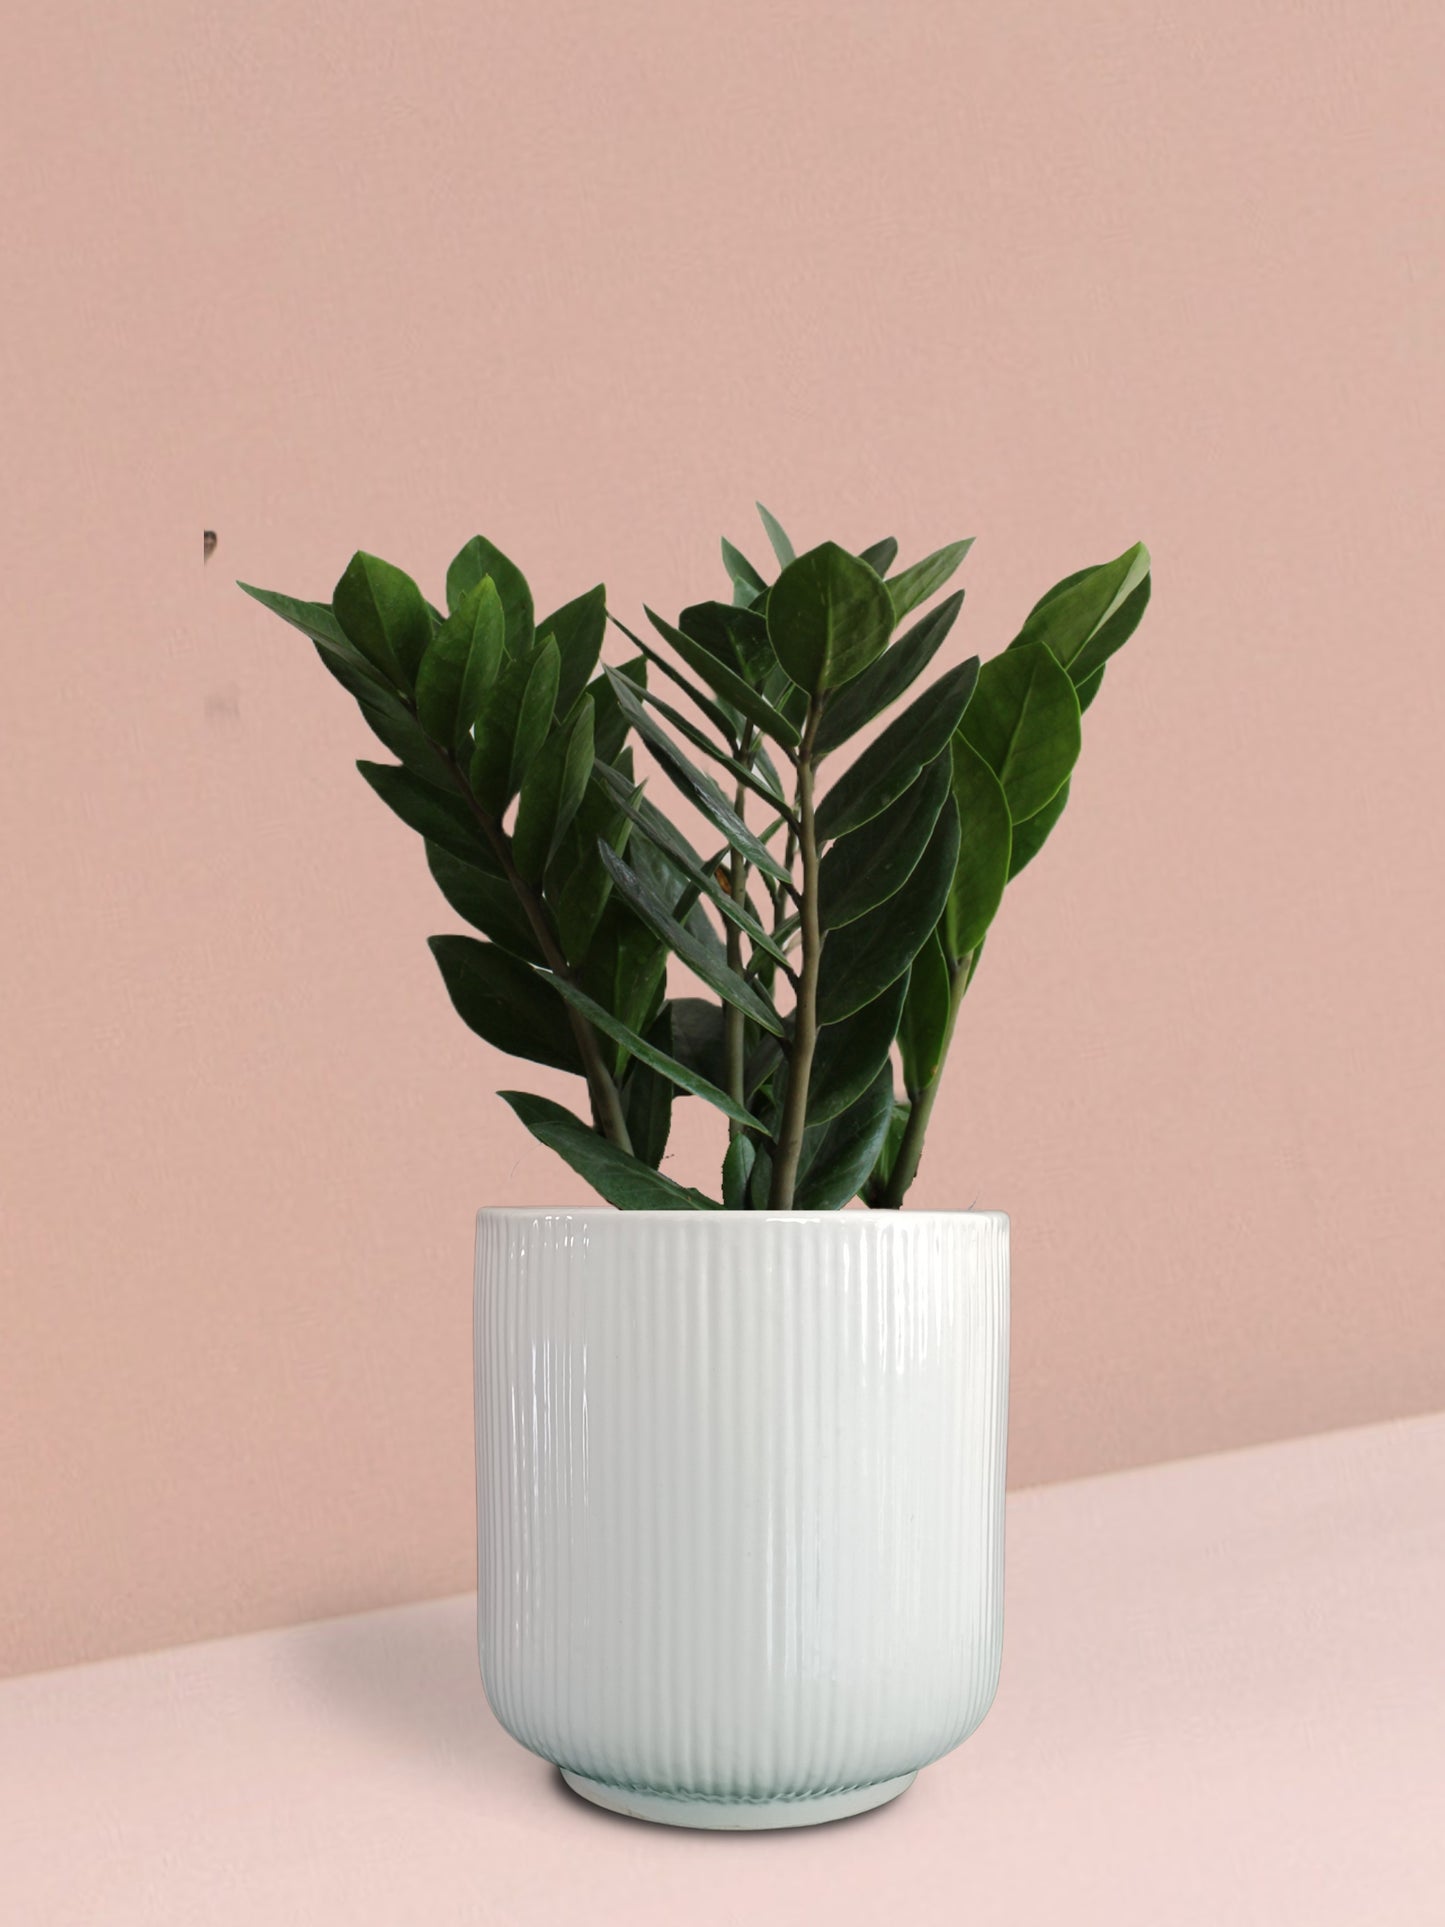 ZZ Green Plant in Ceramic Pot (Medium)